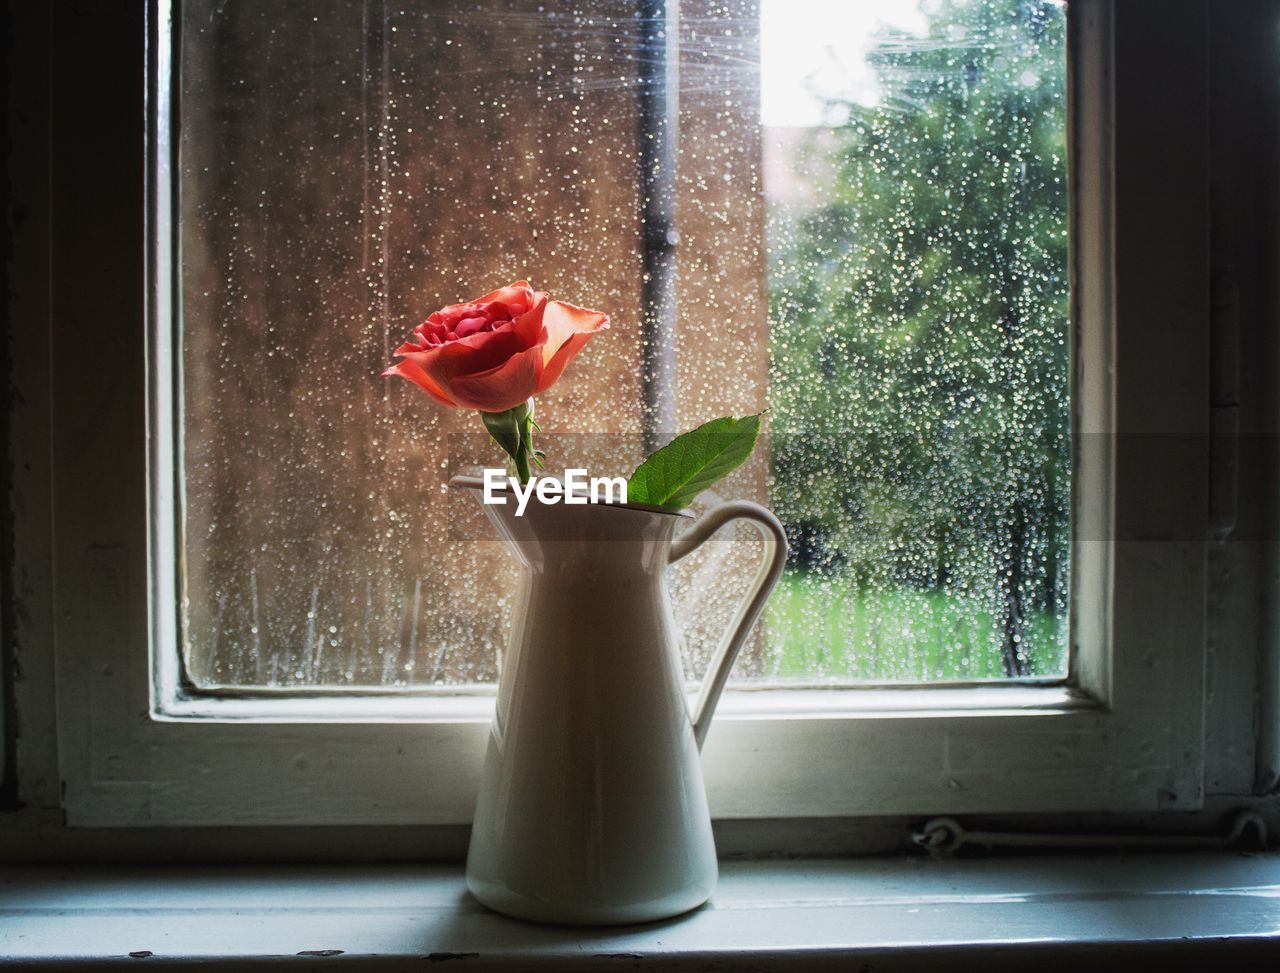 Rose in jug on window sill